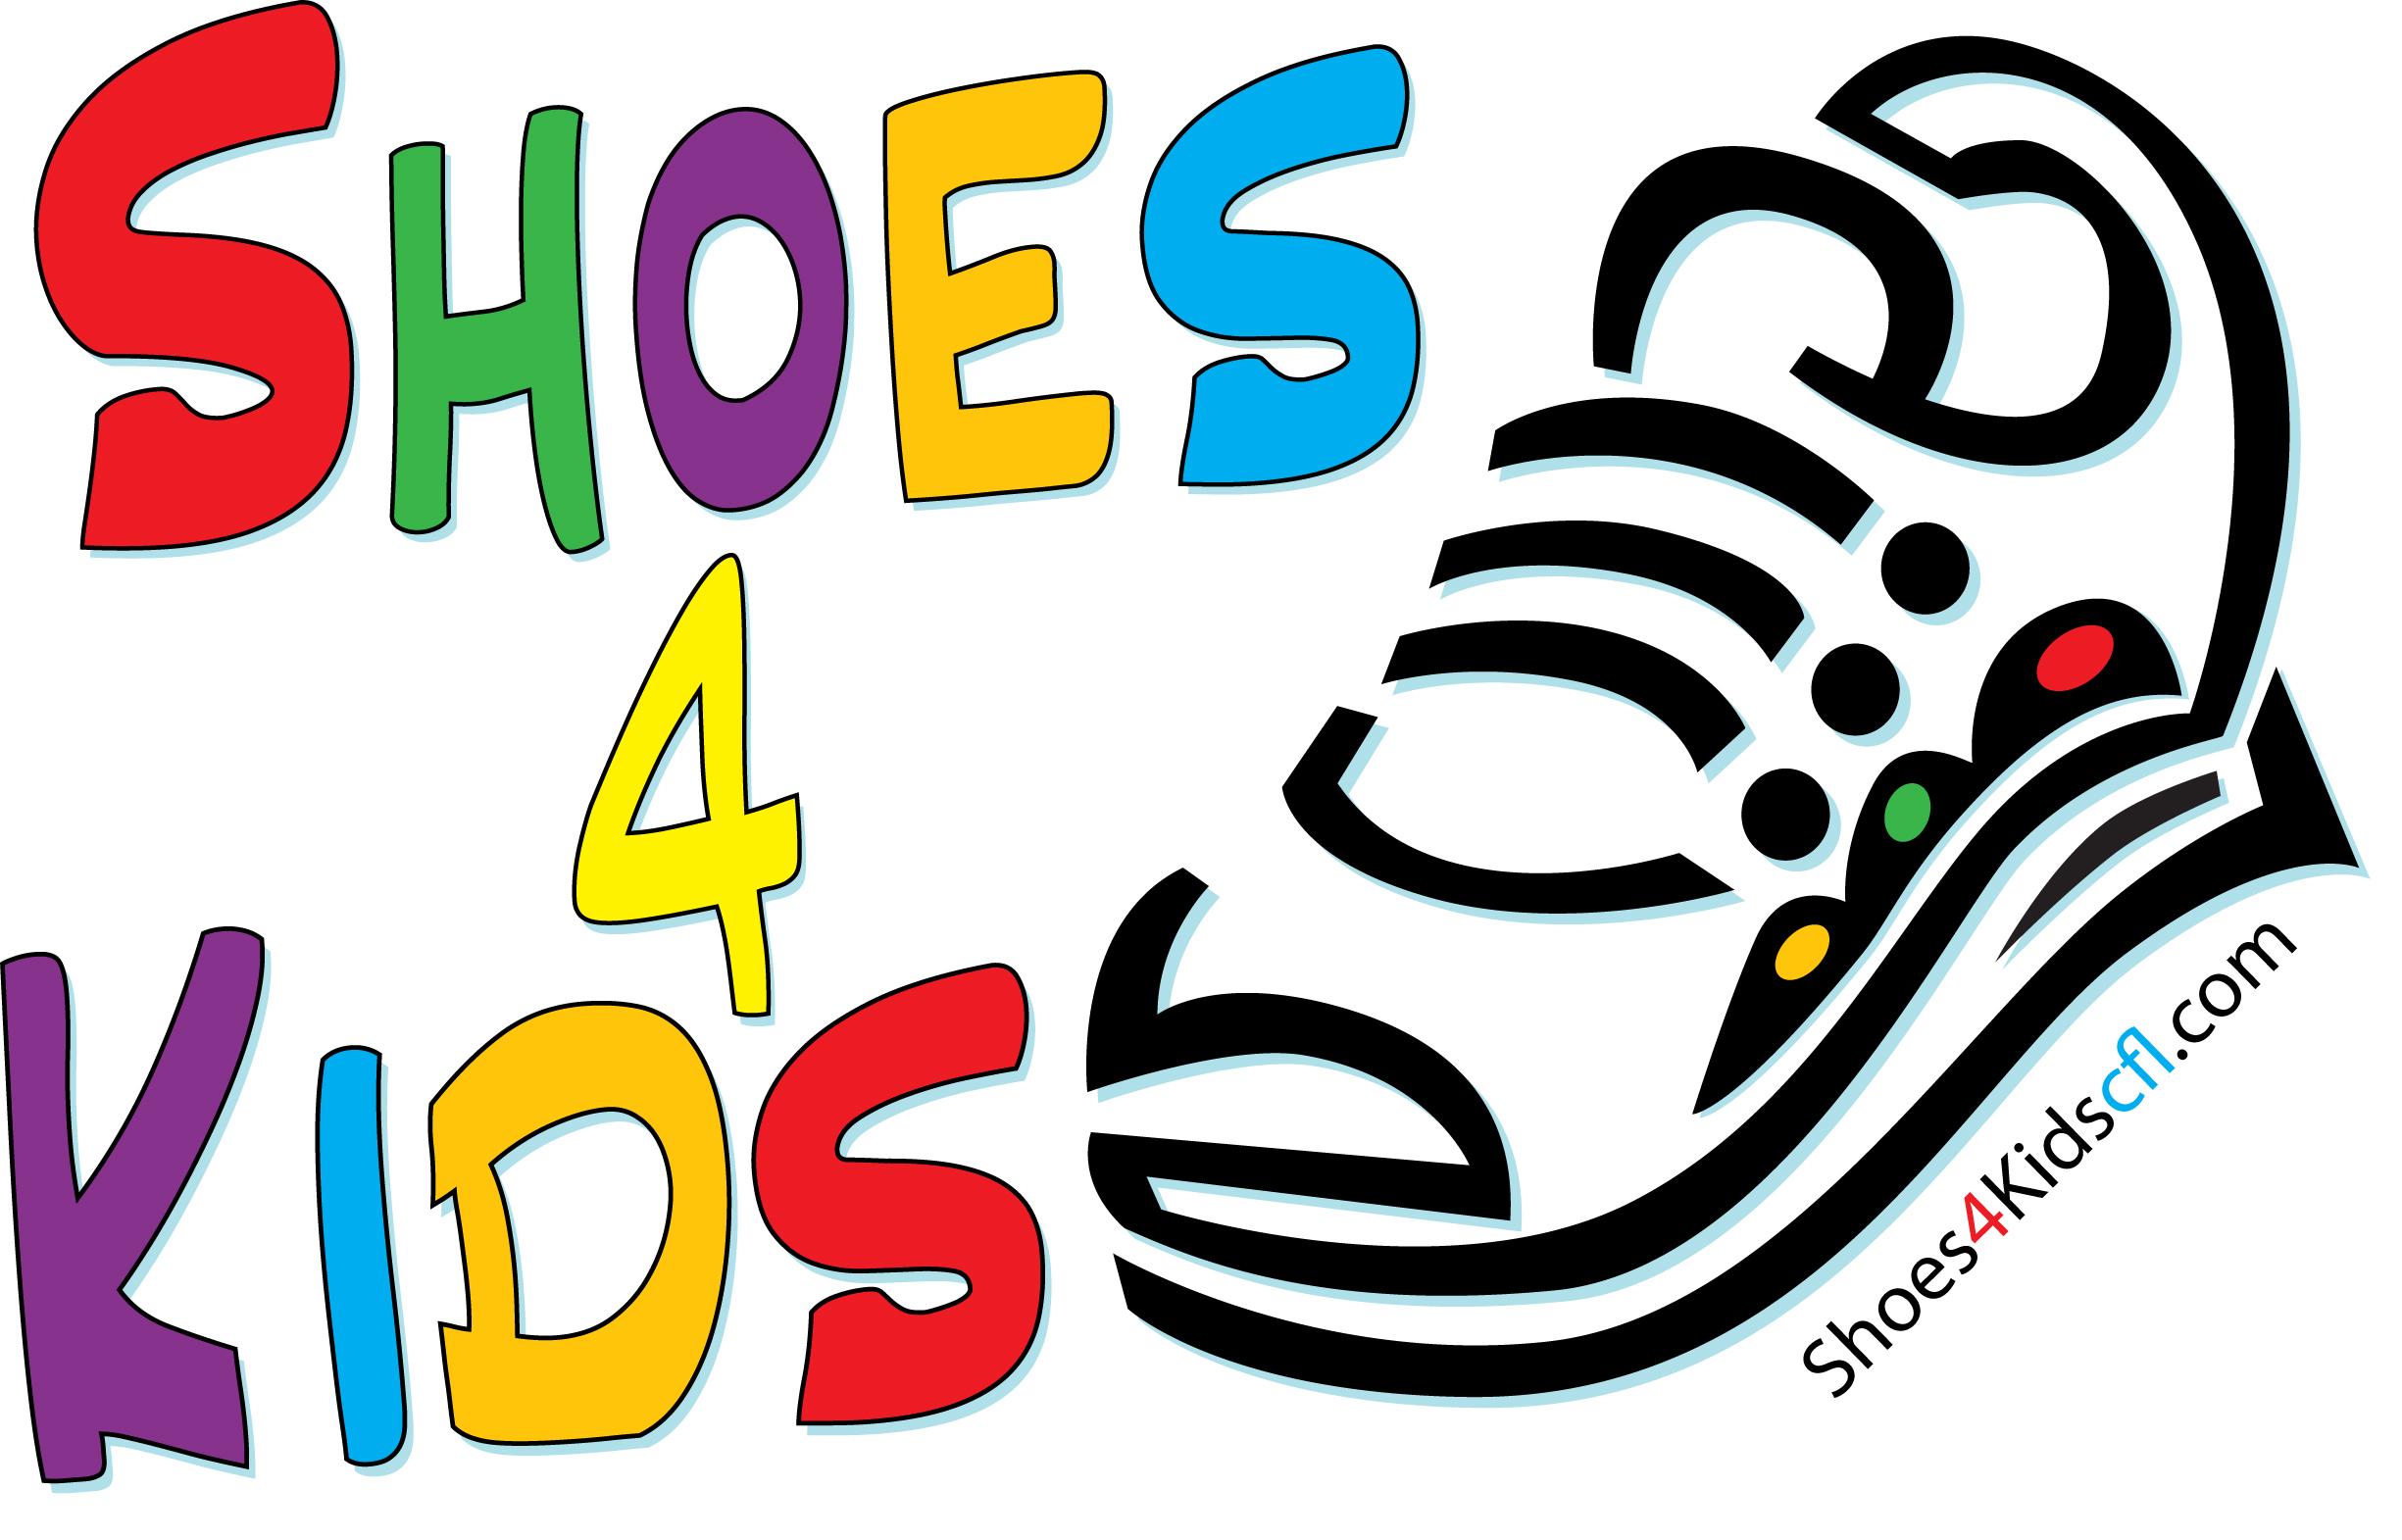 Shoes4Kids